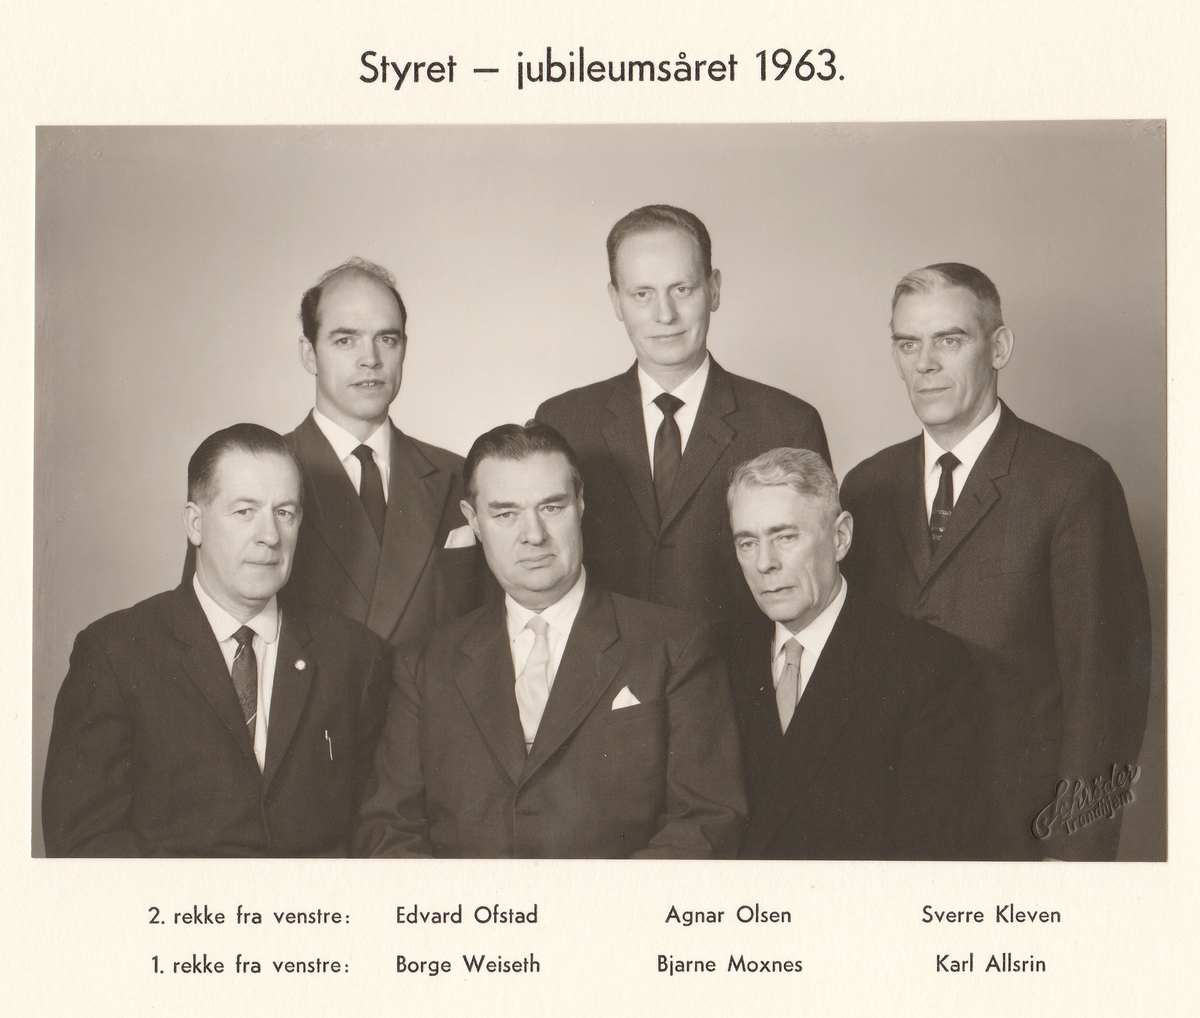 Styret - jubileumsåret 1963